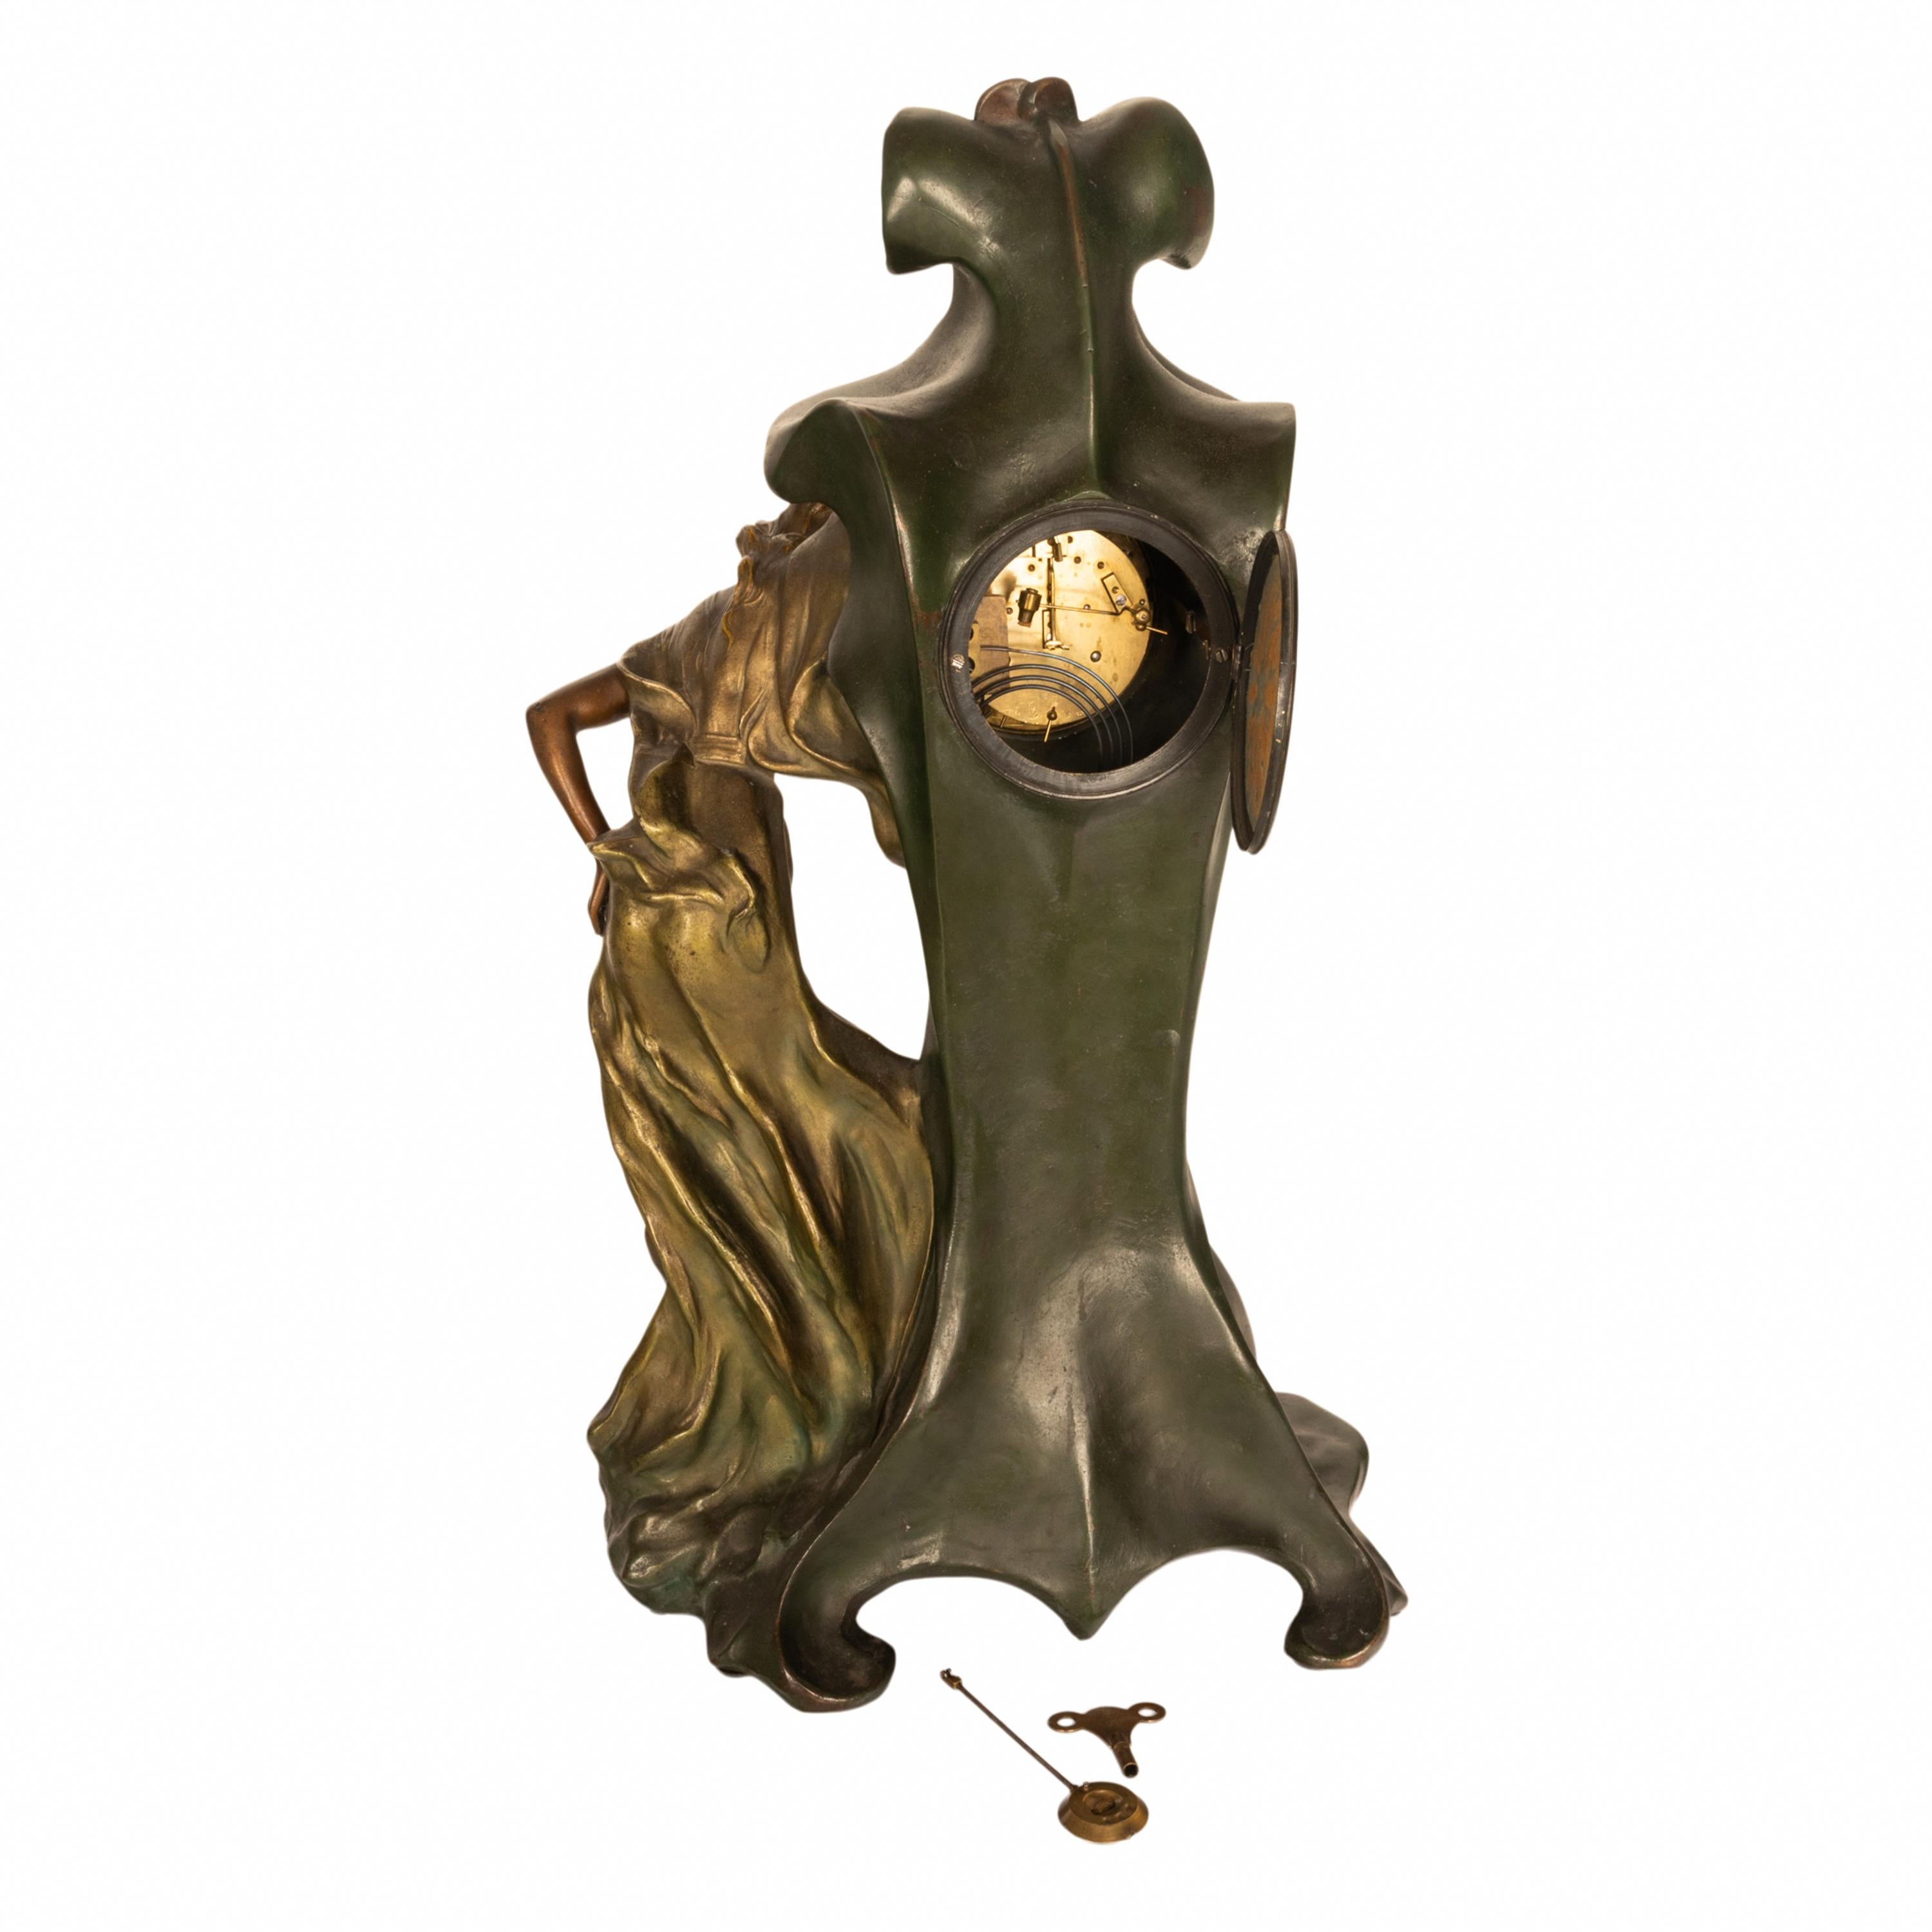 Antique French Art Nouveau Cold-Painted Bronze Figural Statue 8 Day Clock 1900 For Sale 9